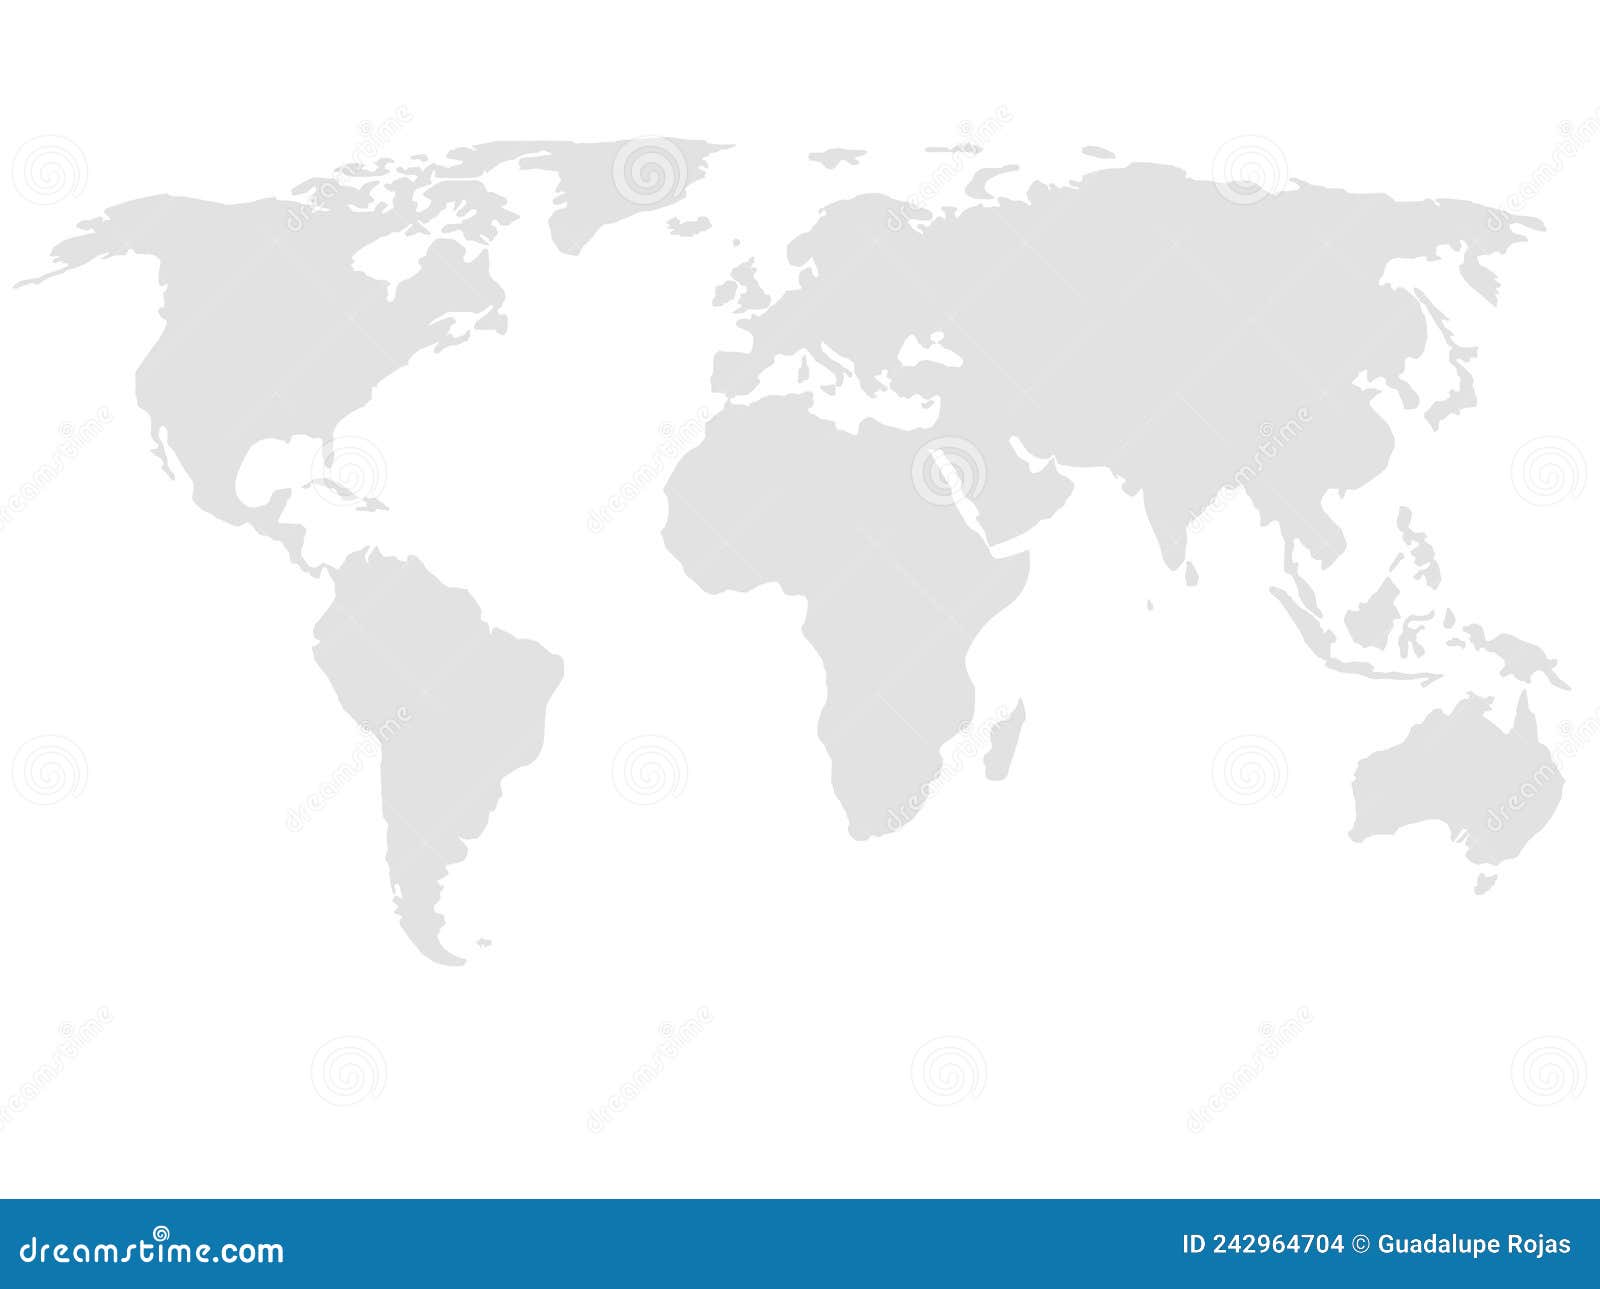 world map or mapa mundi on a white colored background